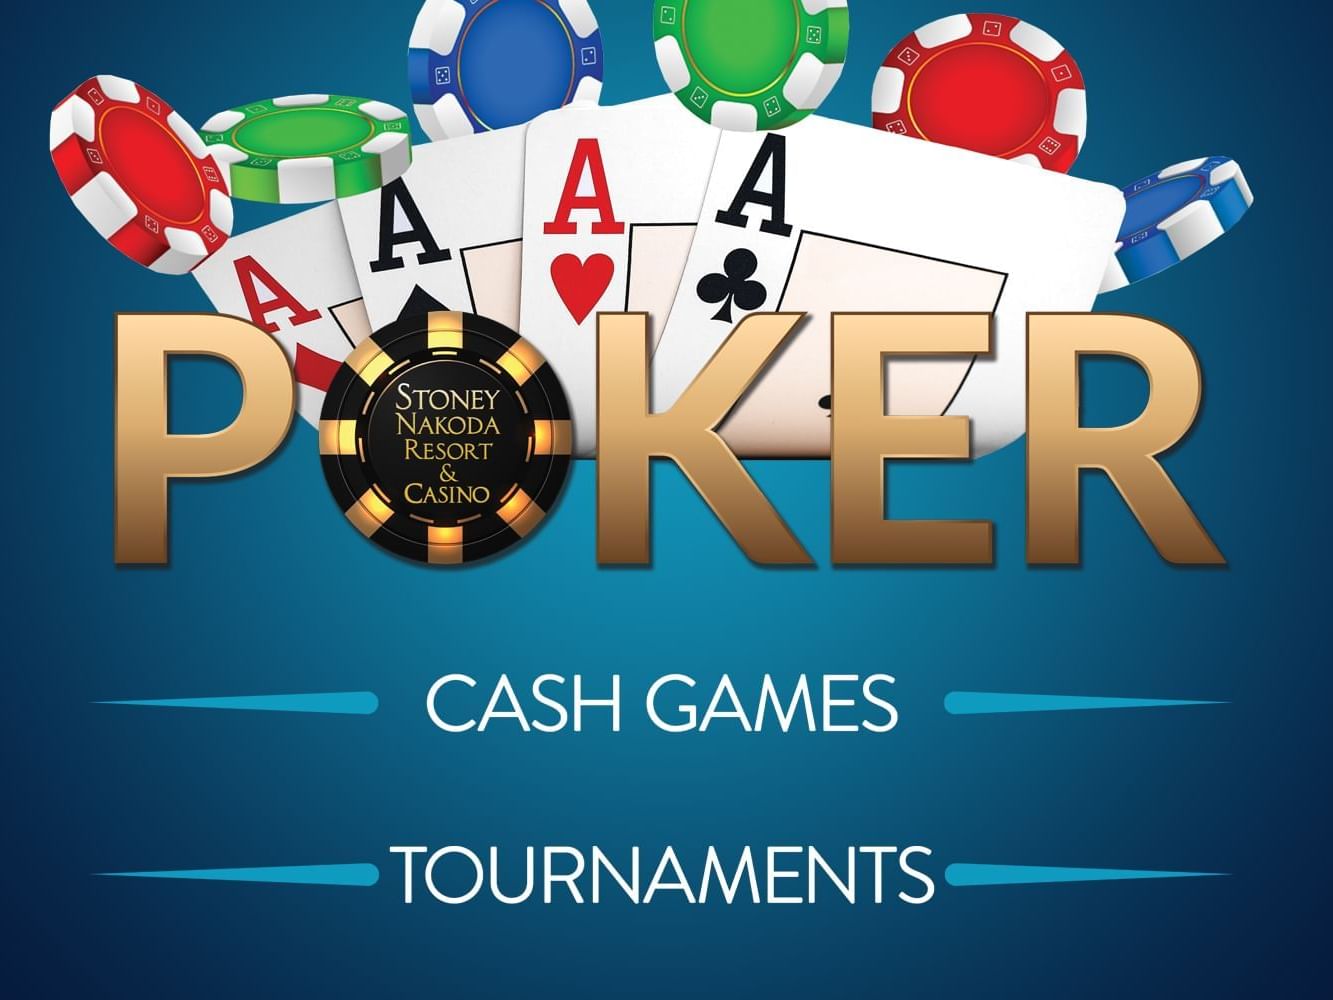 Poker poster used at Stoney Nakoda Resort & Casino